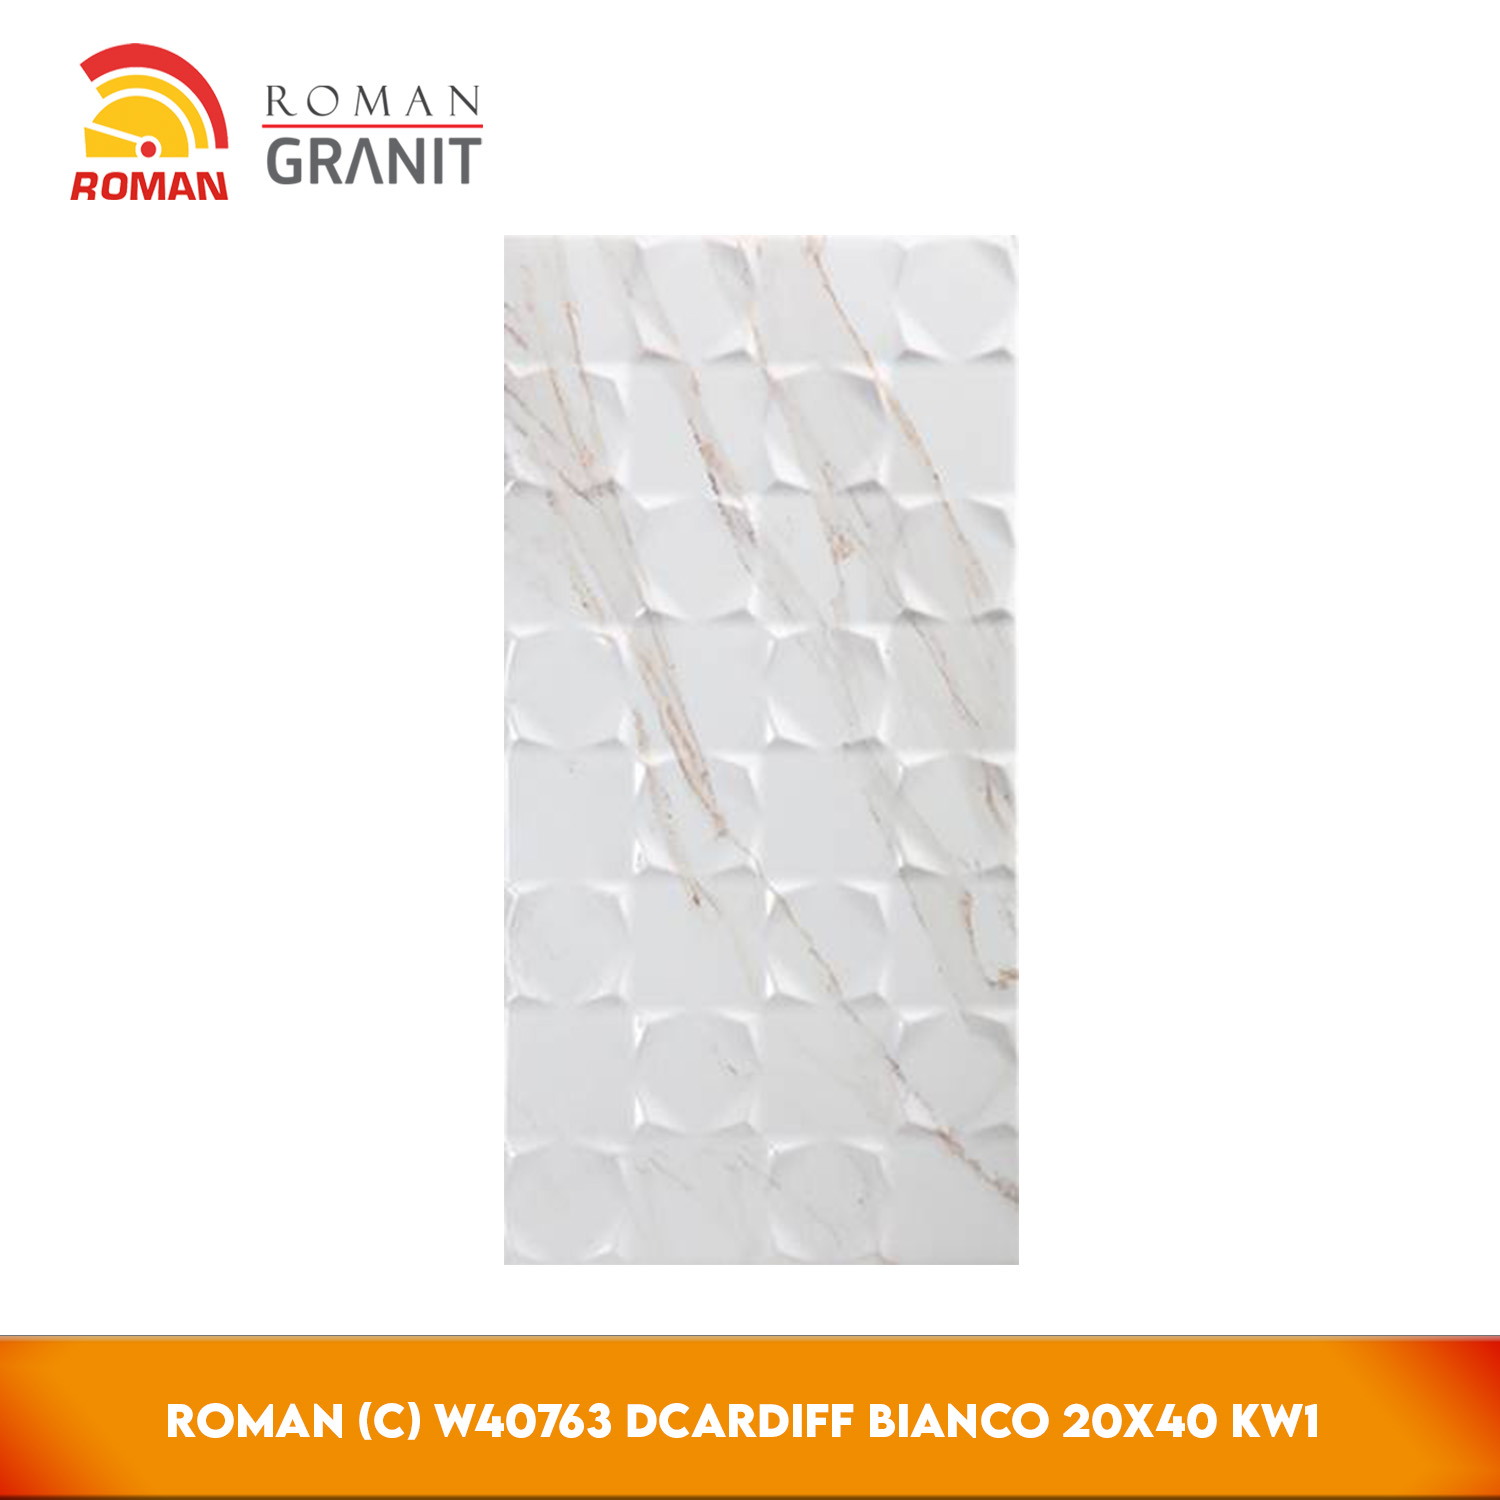 Roman W40763 dCardiff Bianco 20X40 KW1 - Keramik Dinding